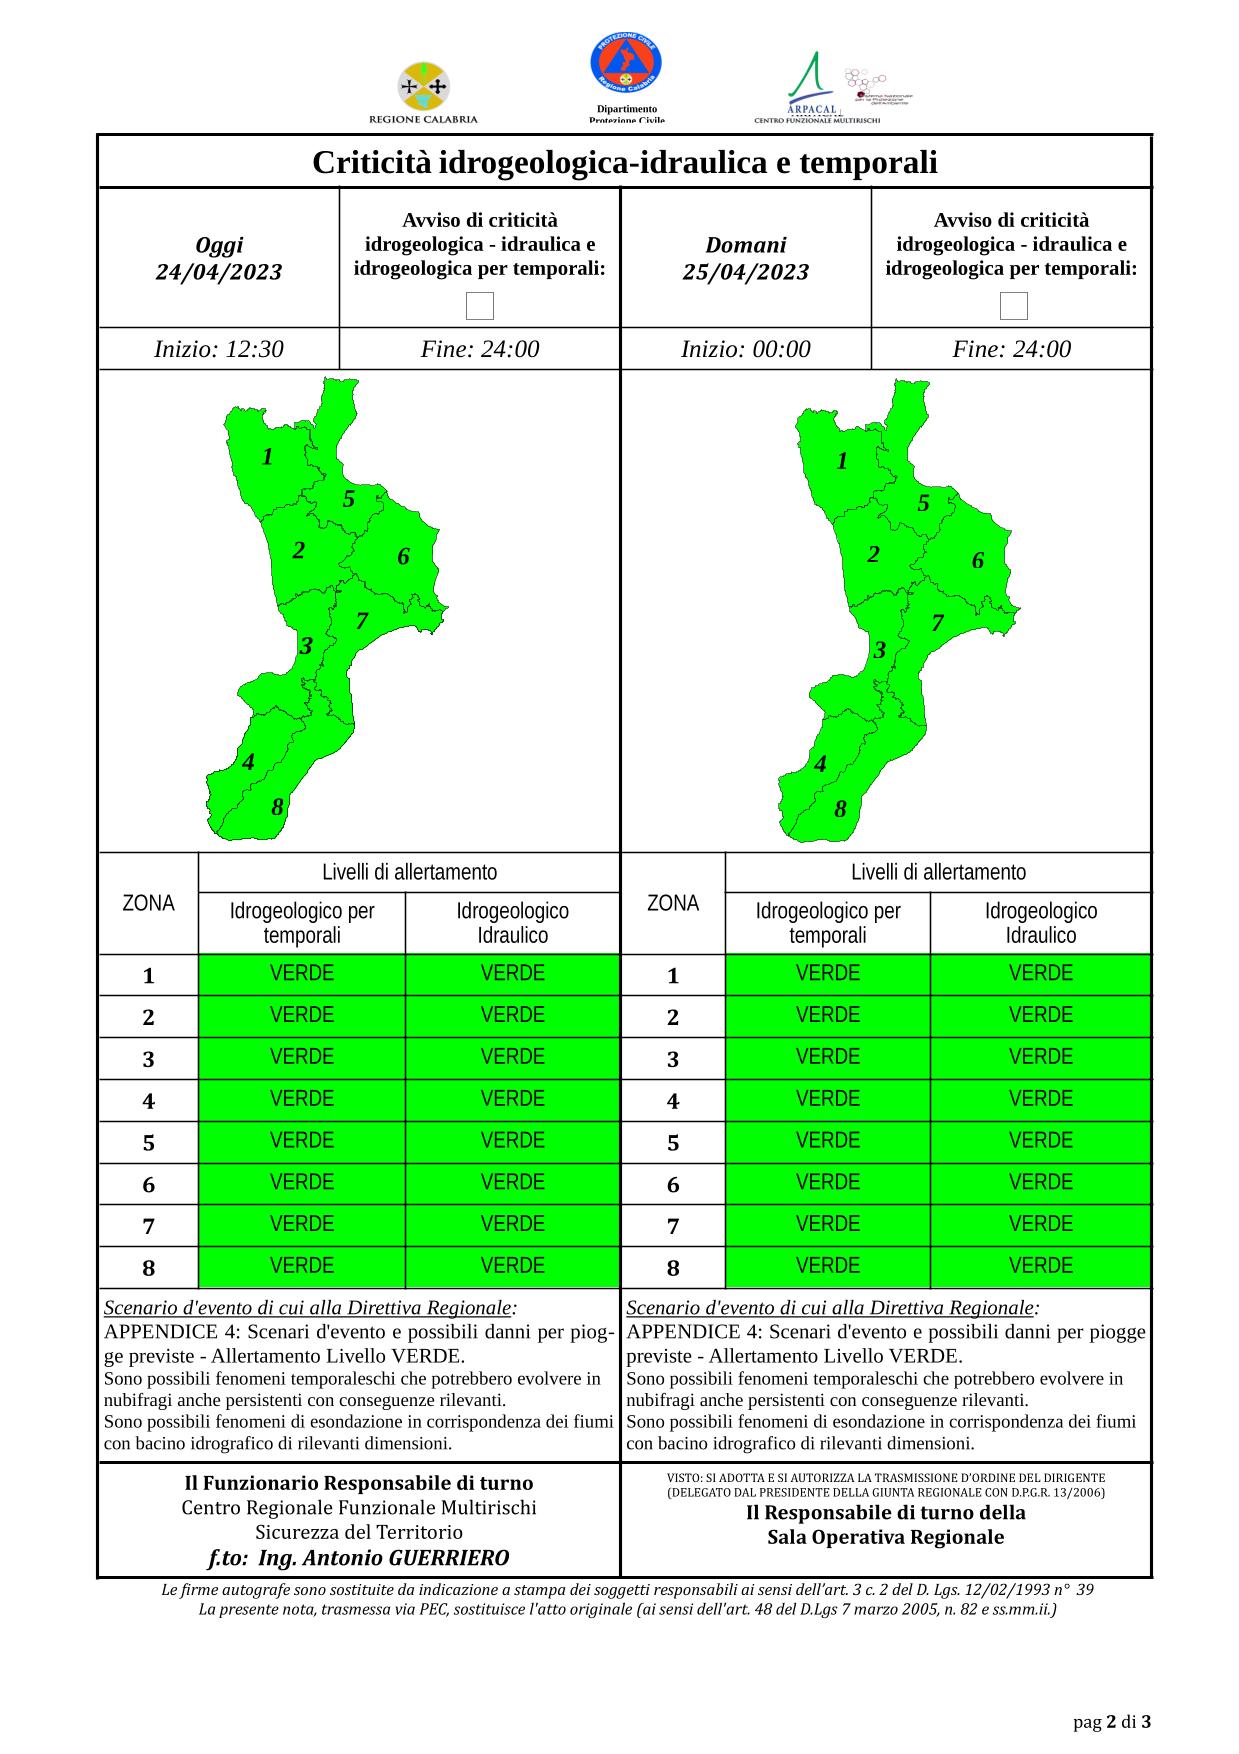 Criticità idrogeologica-idraulica e temporali in Calabria 24-04-2023